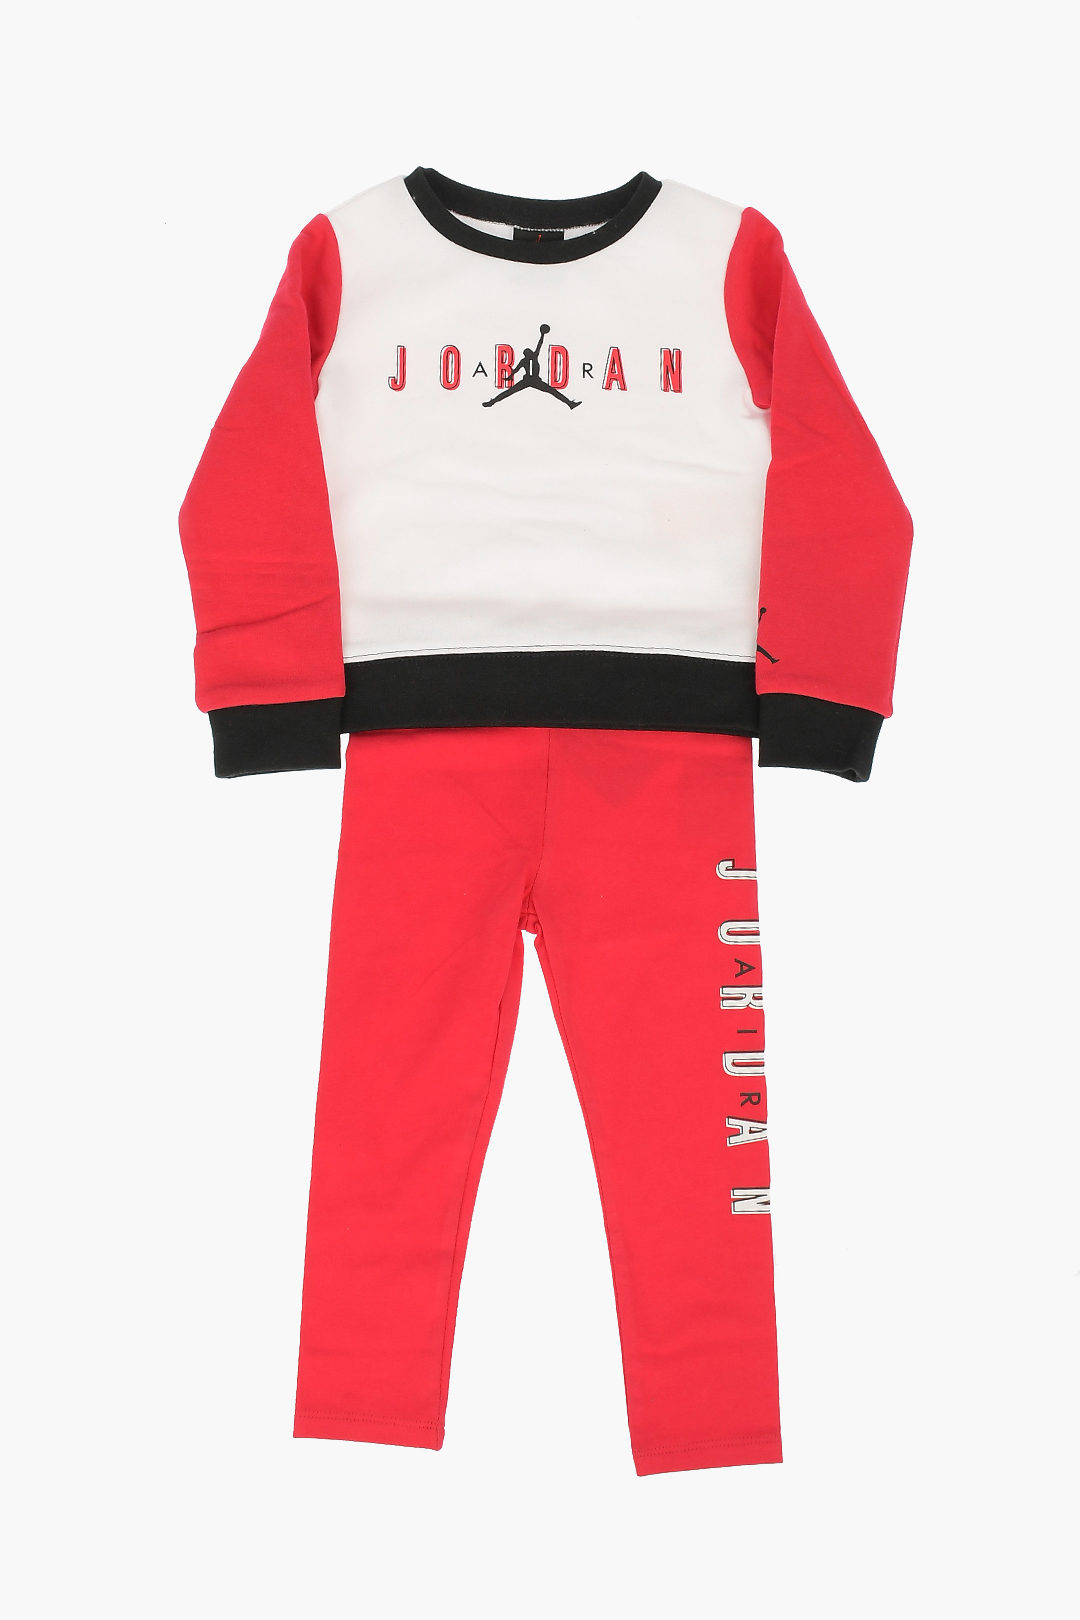 https://data.glamood.com/imgprodotto/air-jordan-jogger-and-sweatshirt-set_1048675_zoom.jpg